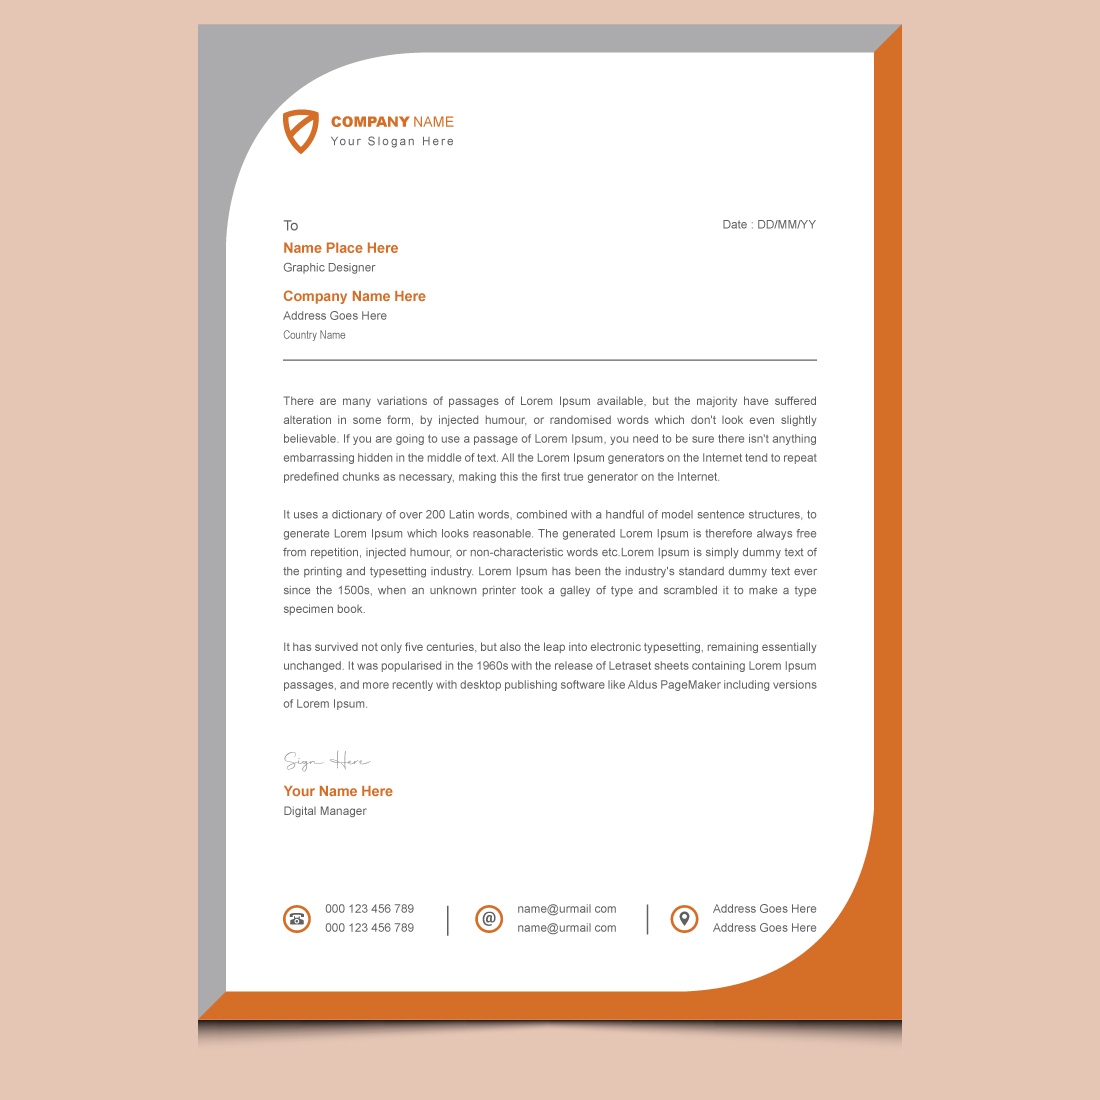 Business letterhead template design cover image.